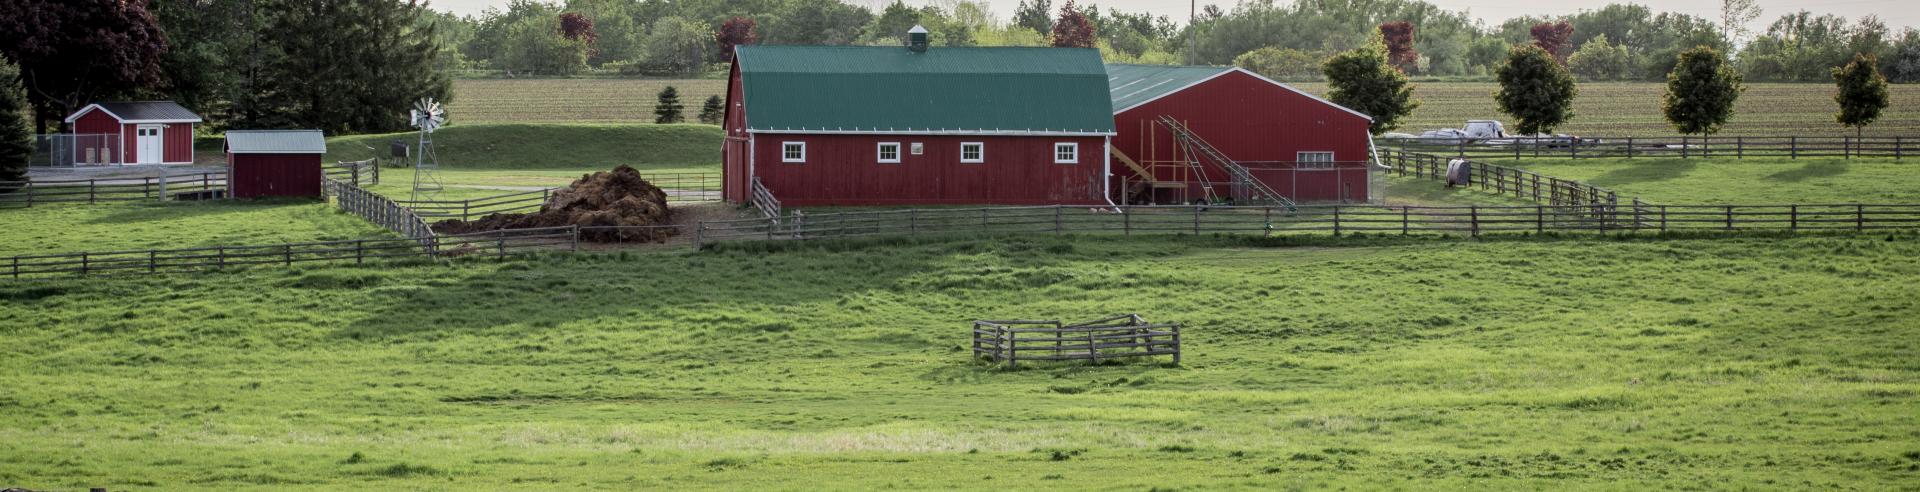 image of red barn in background of farm scenescape